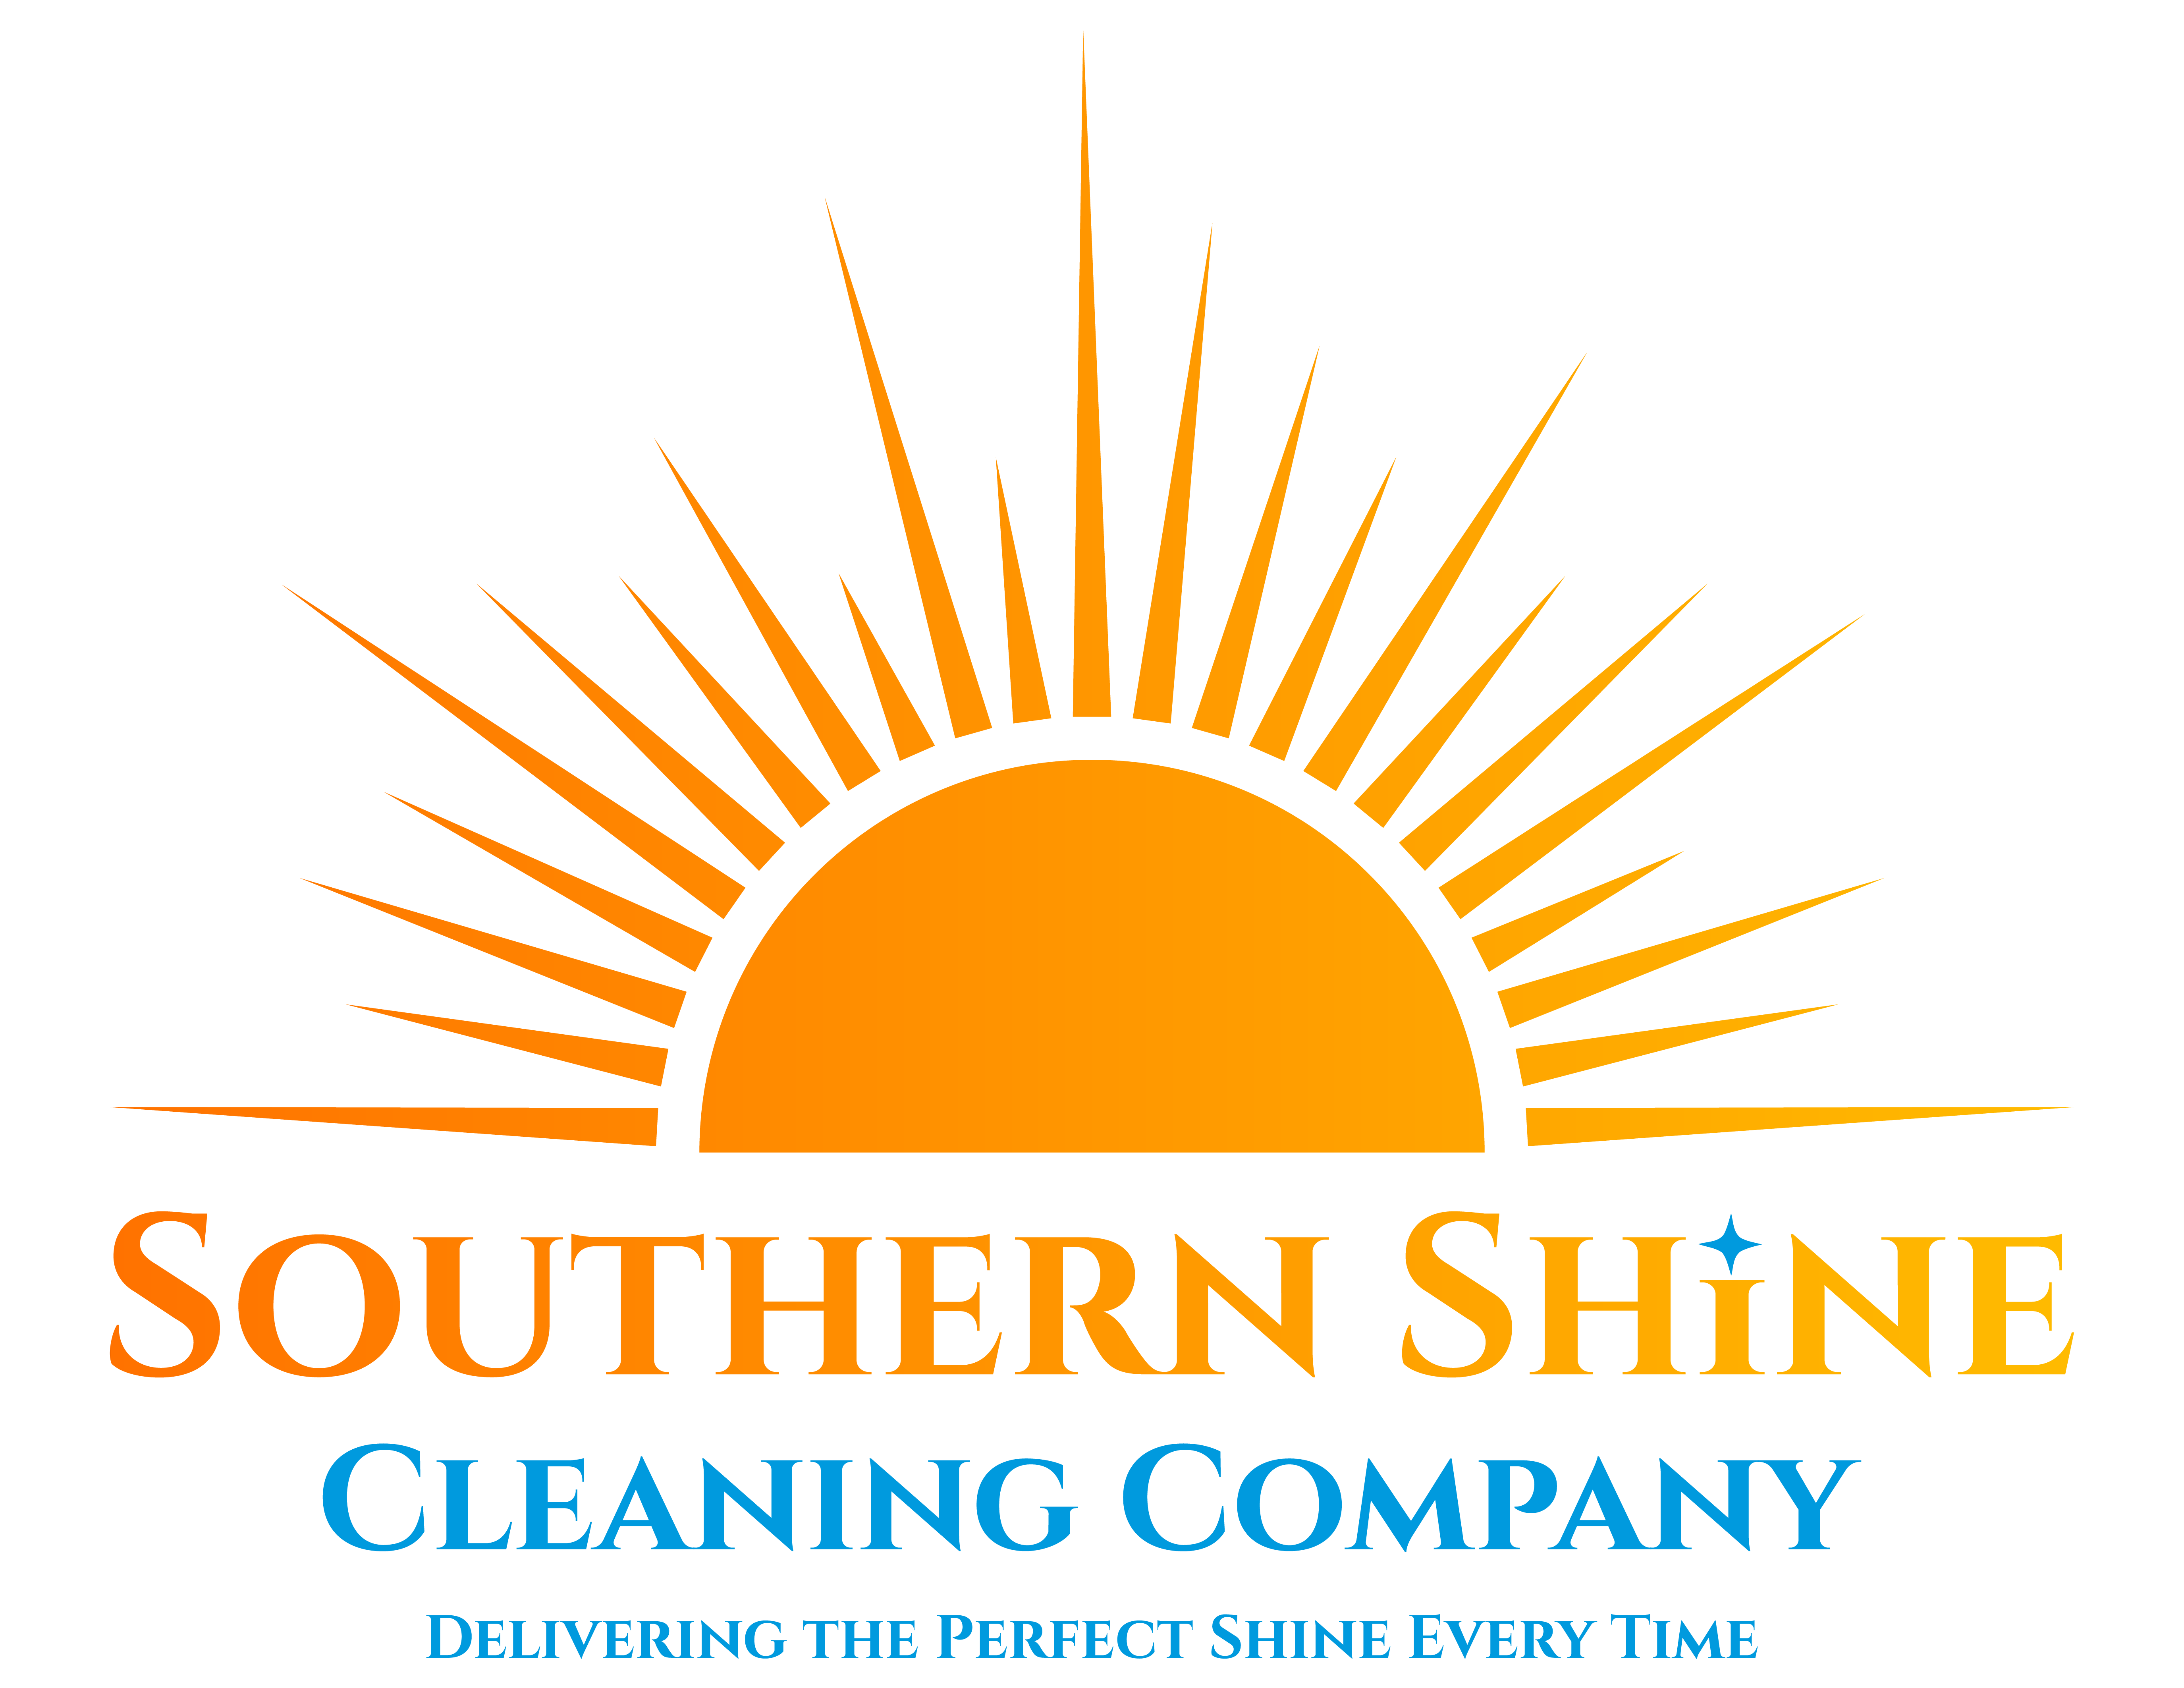 Southern Shine Media